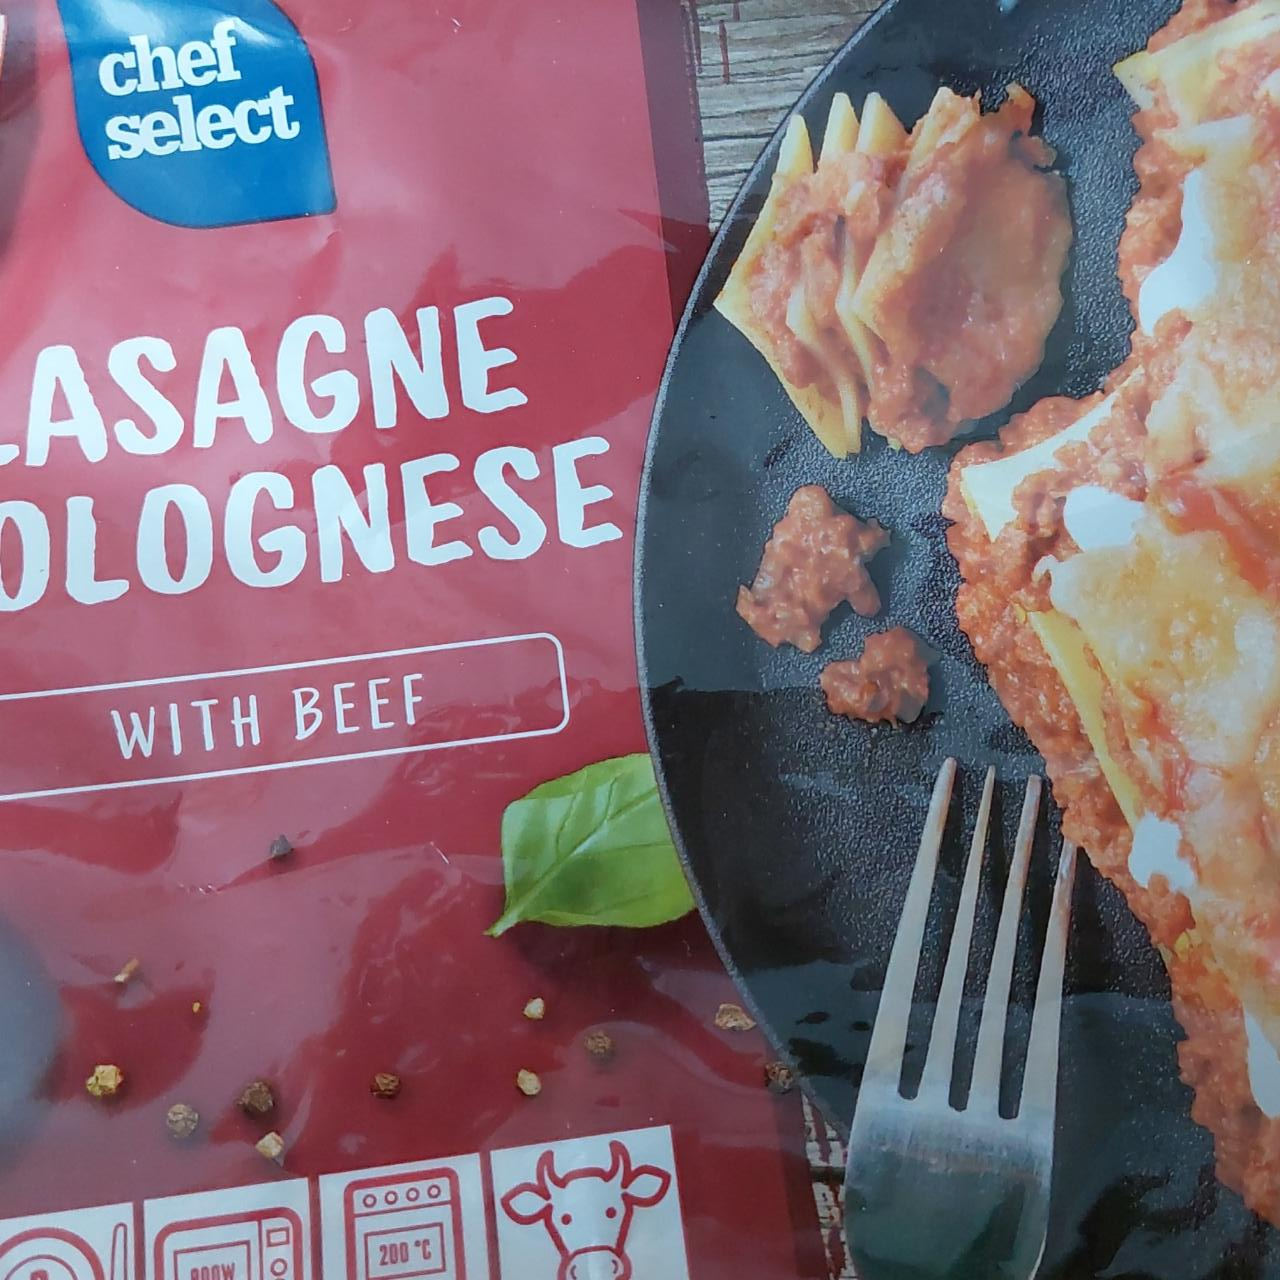 Фото - Lasagne bolognese Chef Select